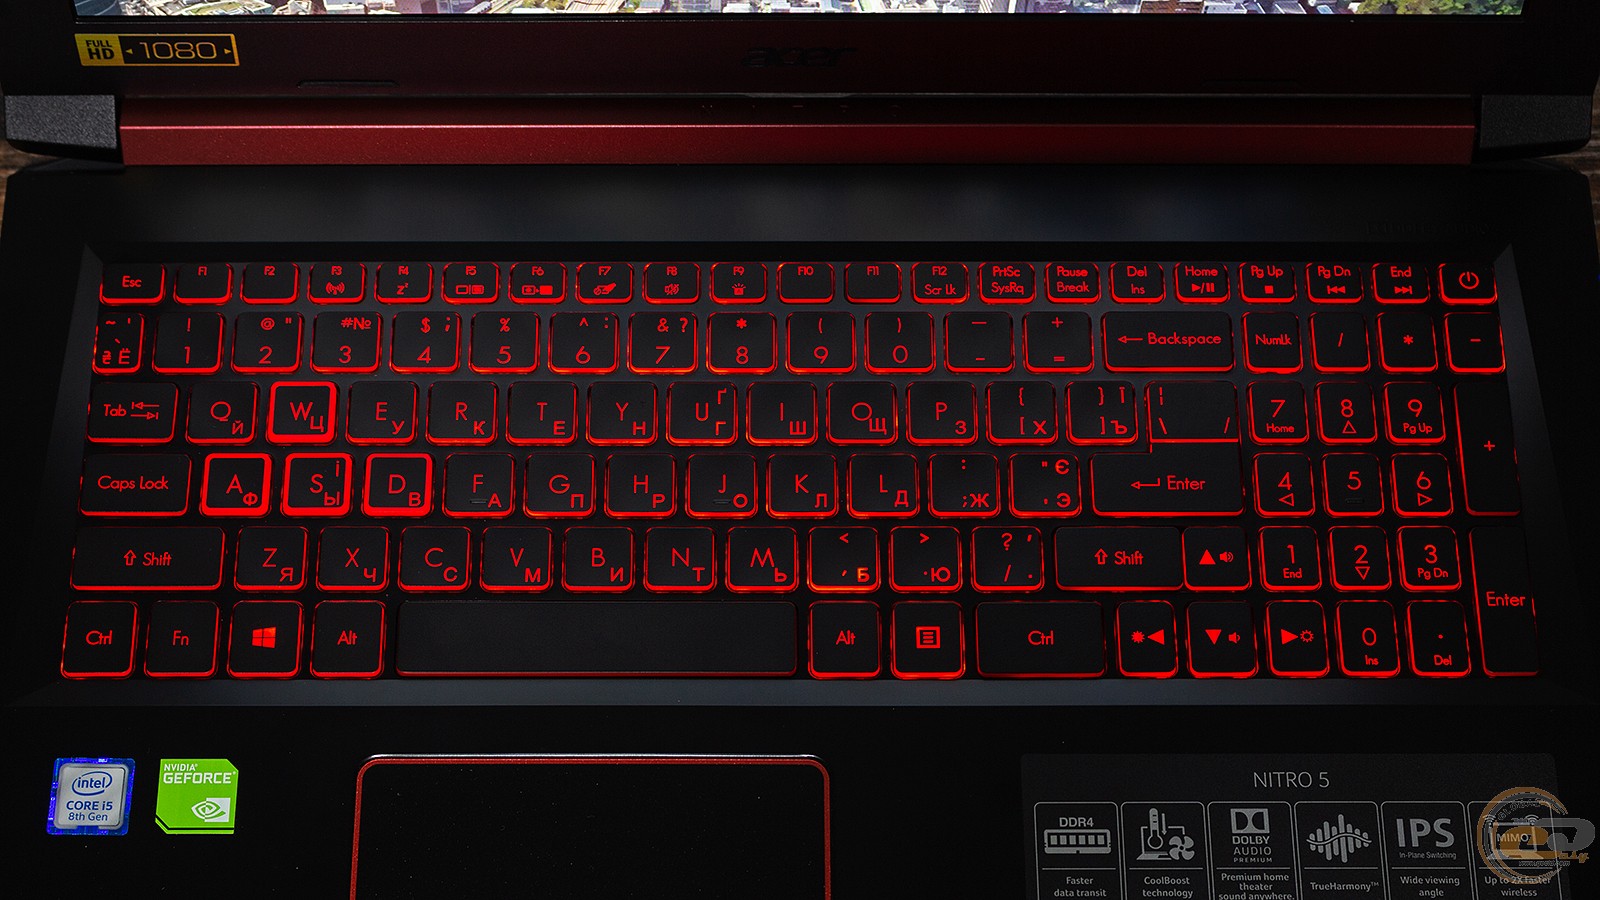 Подсветка клавиатуры ноутбука асер